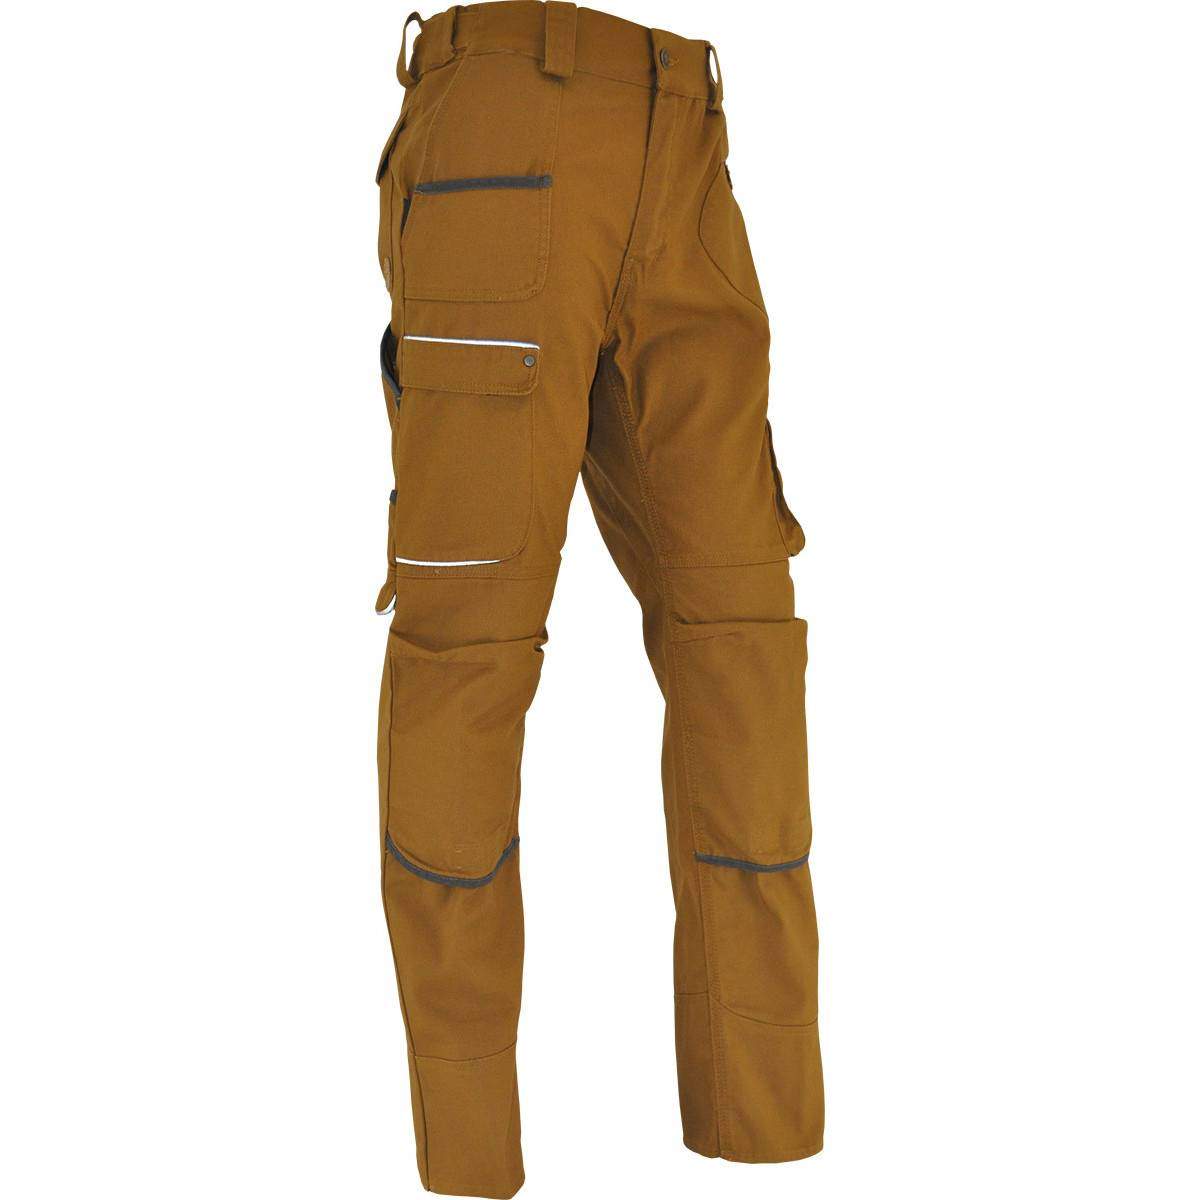 Pantalones de trabajo SAHARA talla 46, bronce